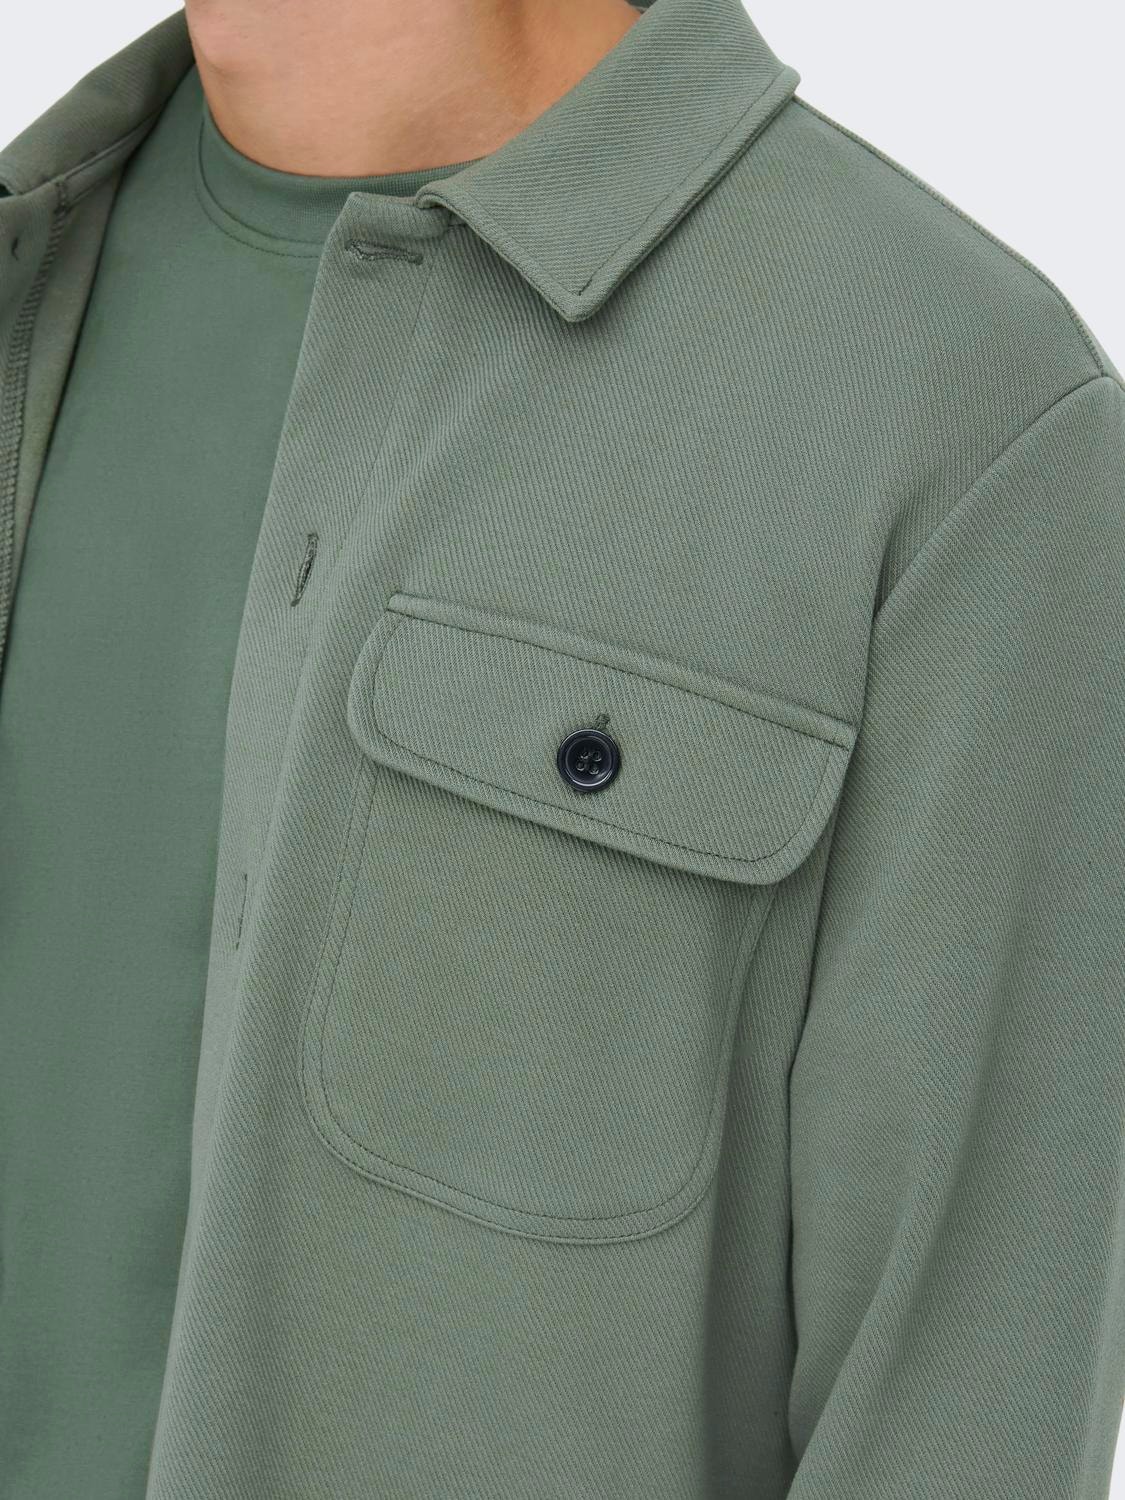 ONLY & SONS Camisas Corte regular Cuello de camisa -Castor Gray - 22021279